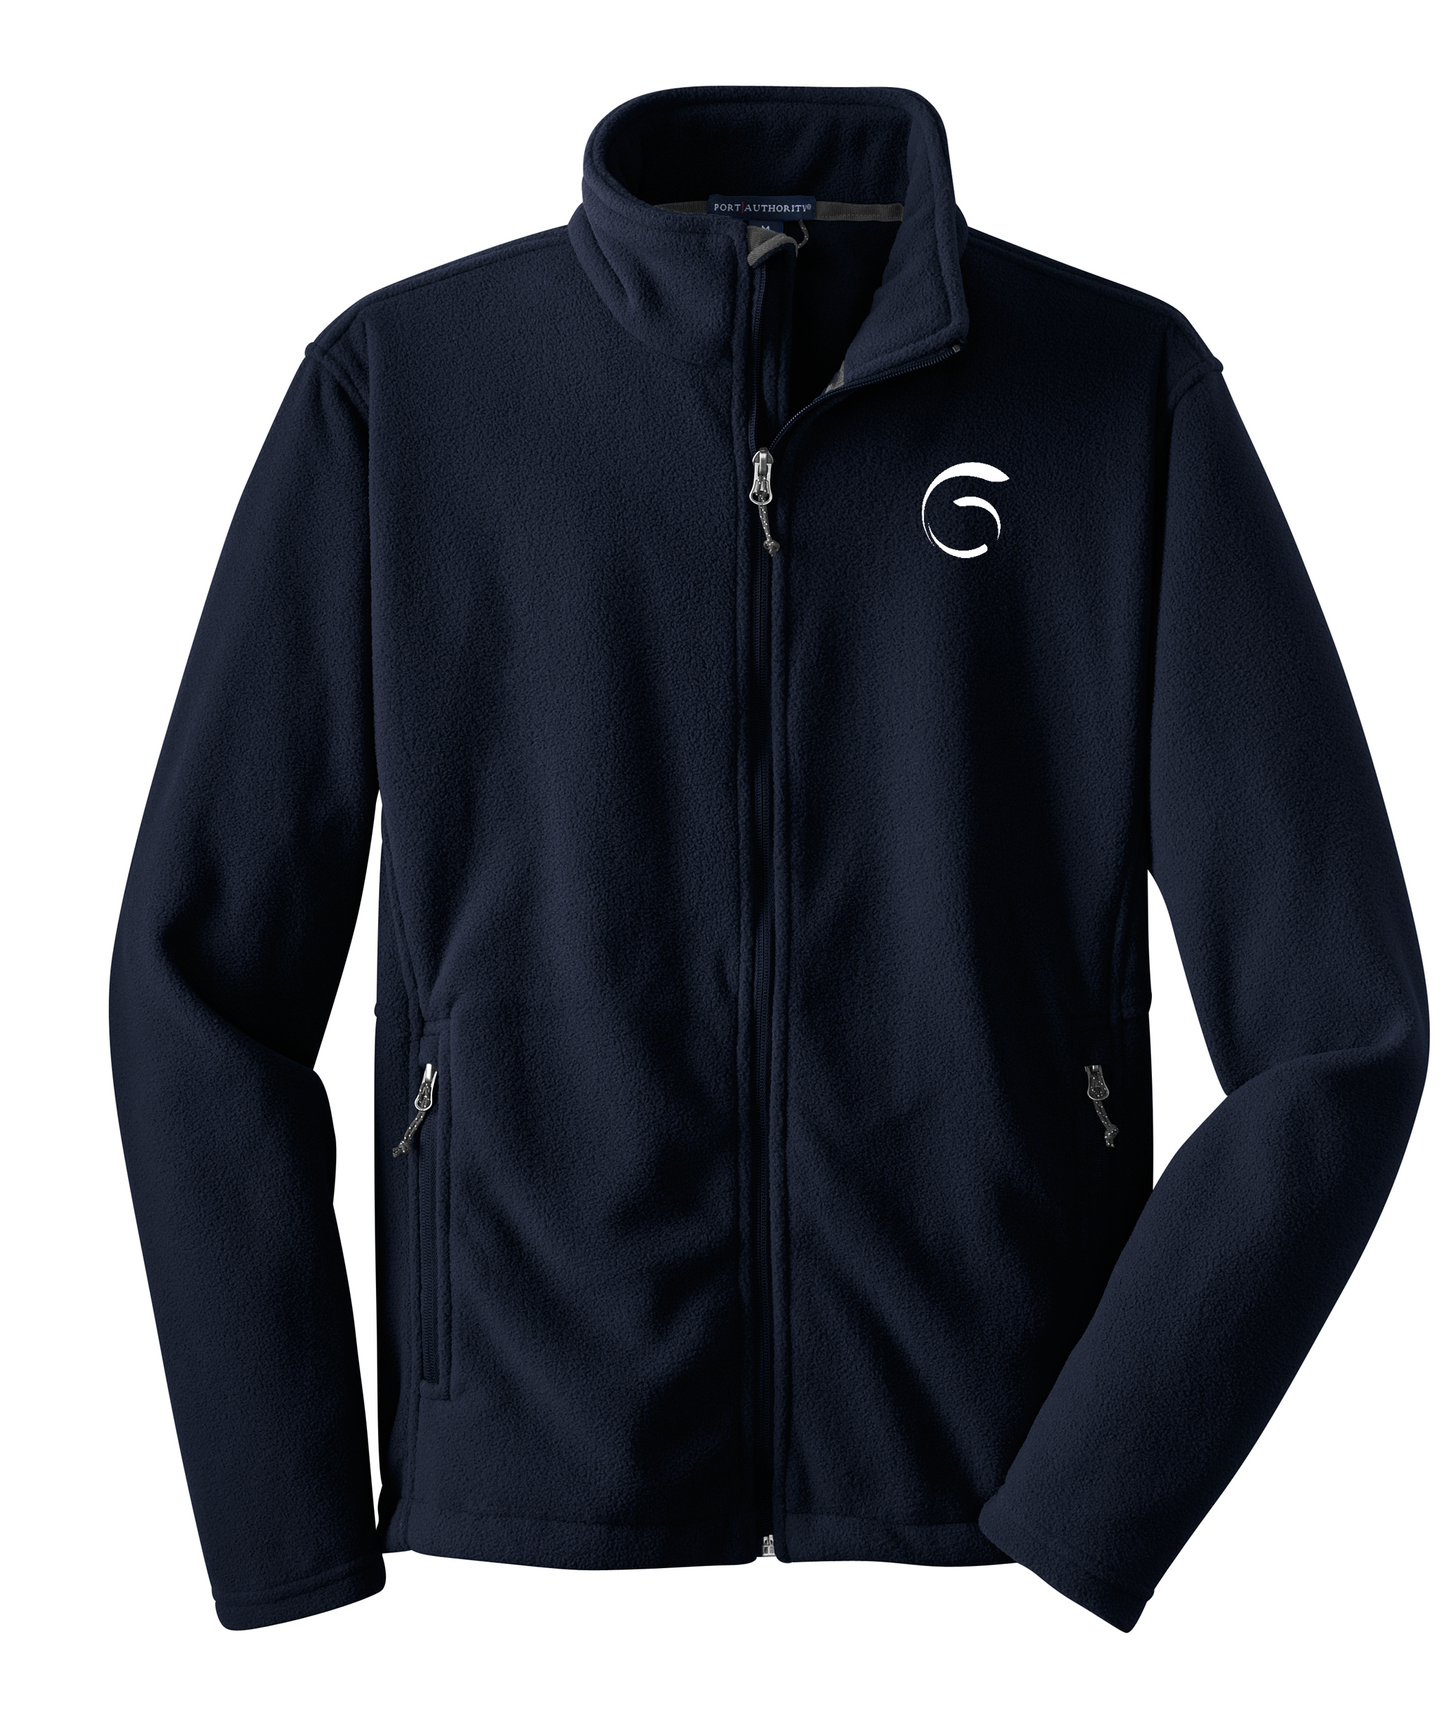 Port Authority® Value Fleece Jacket (Add'l Color Options)